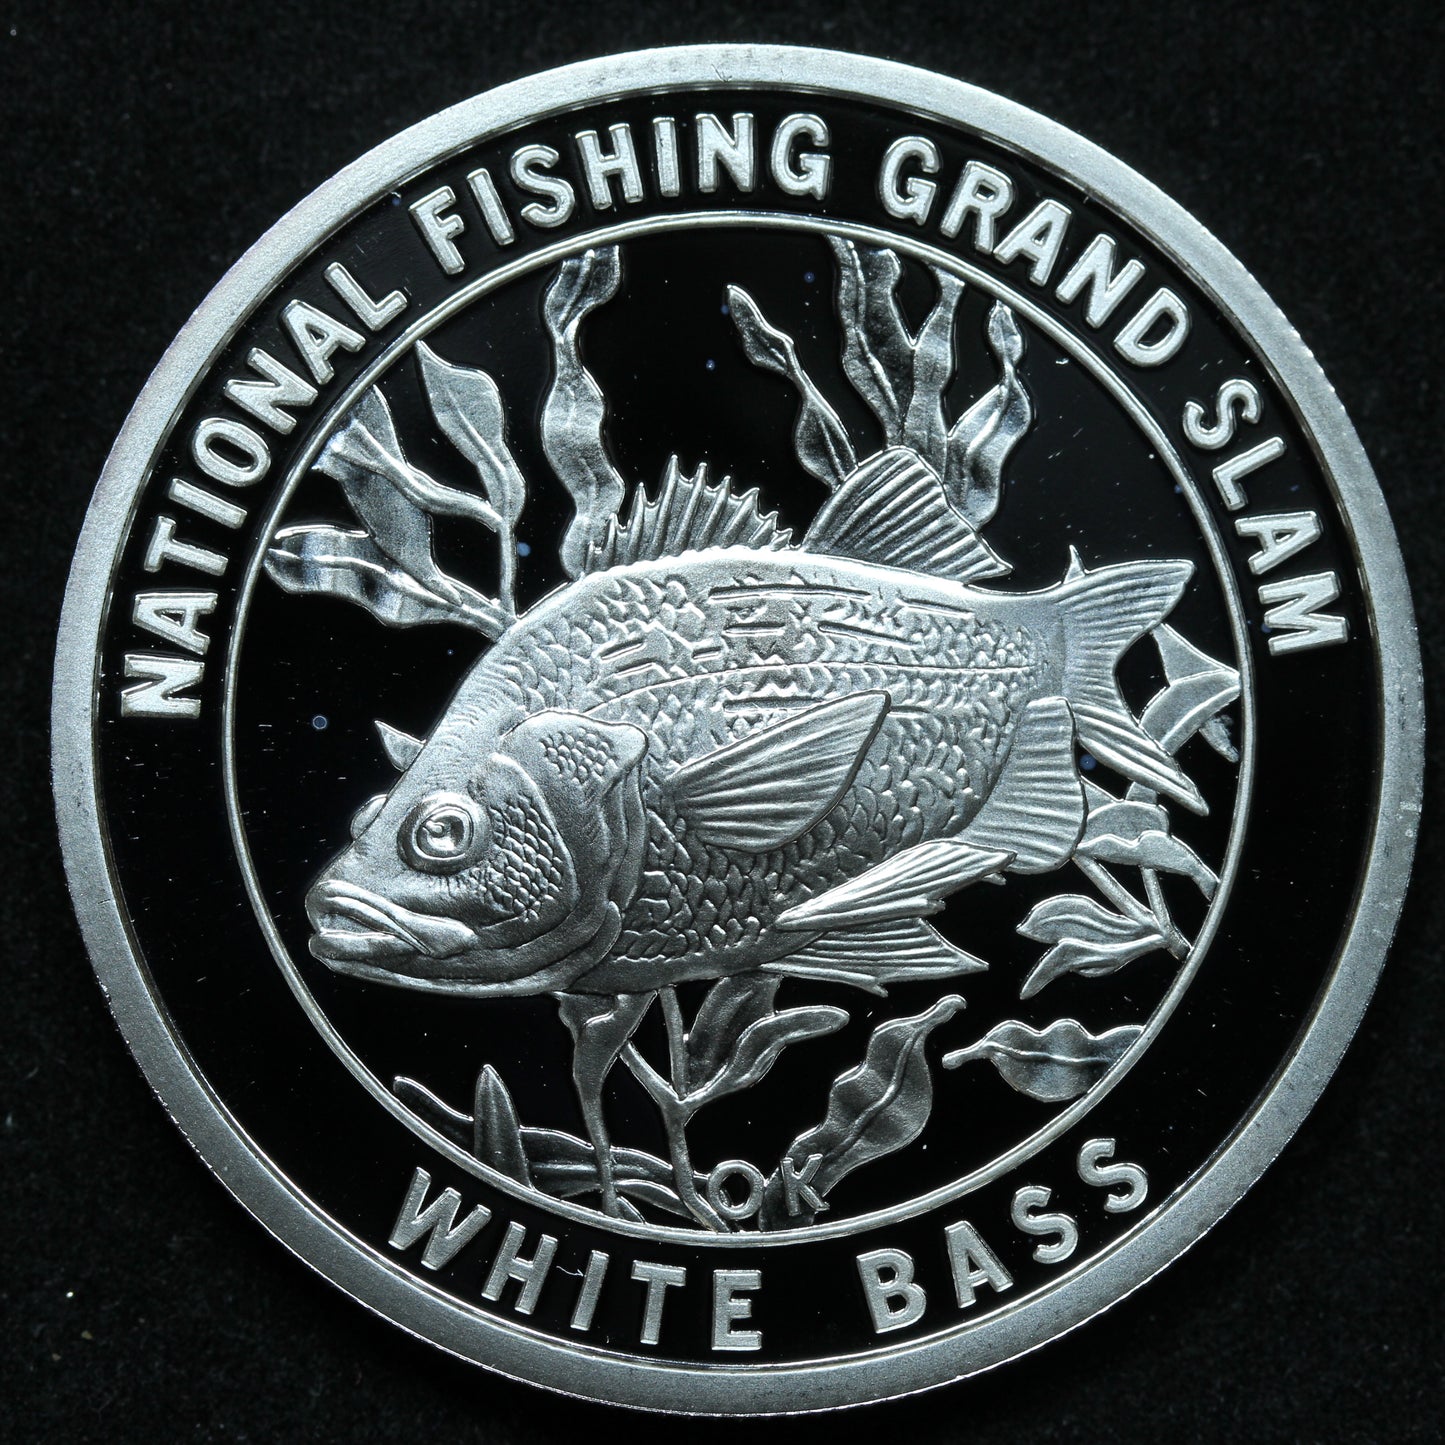 1 oz .999 Fine Silver - National Fishing Grand Slam - White Bass w/ Capsule